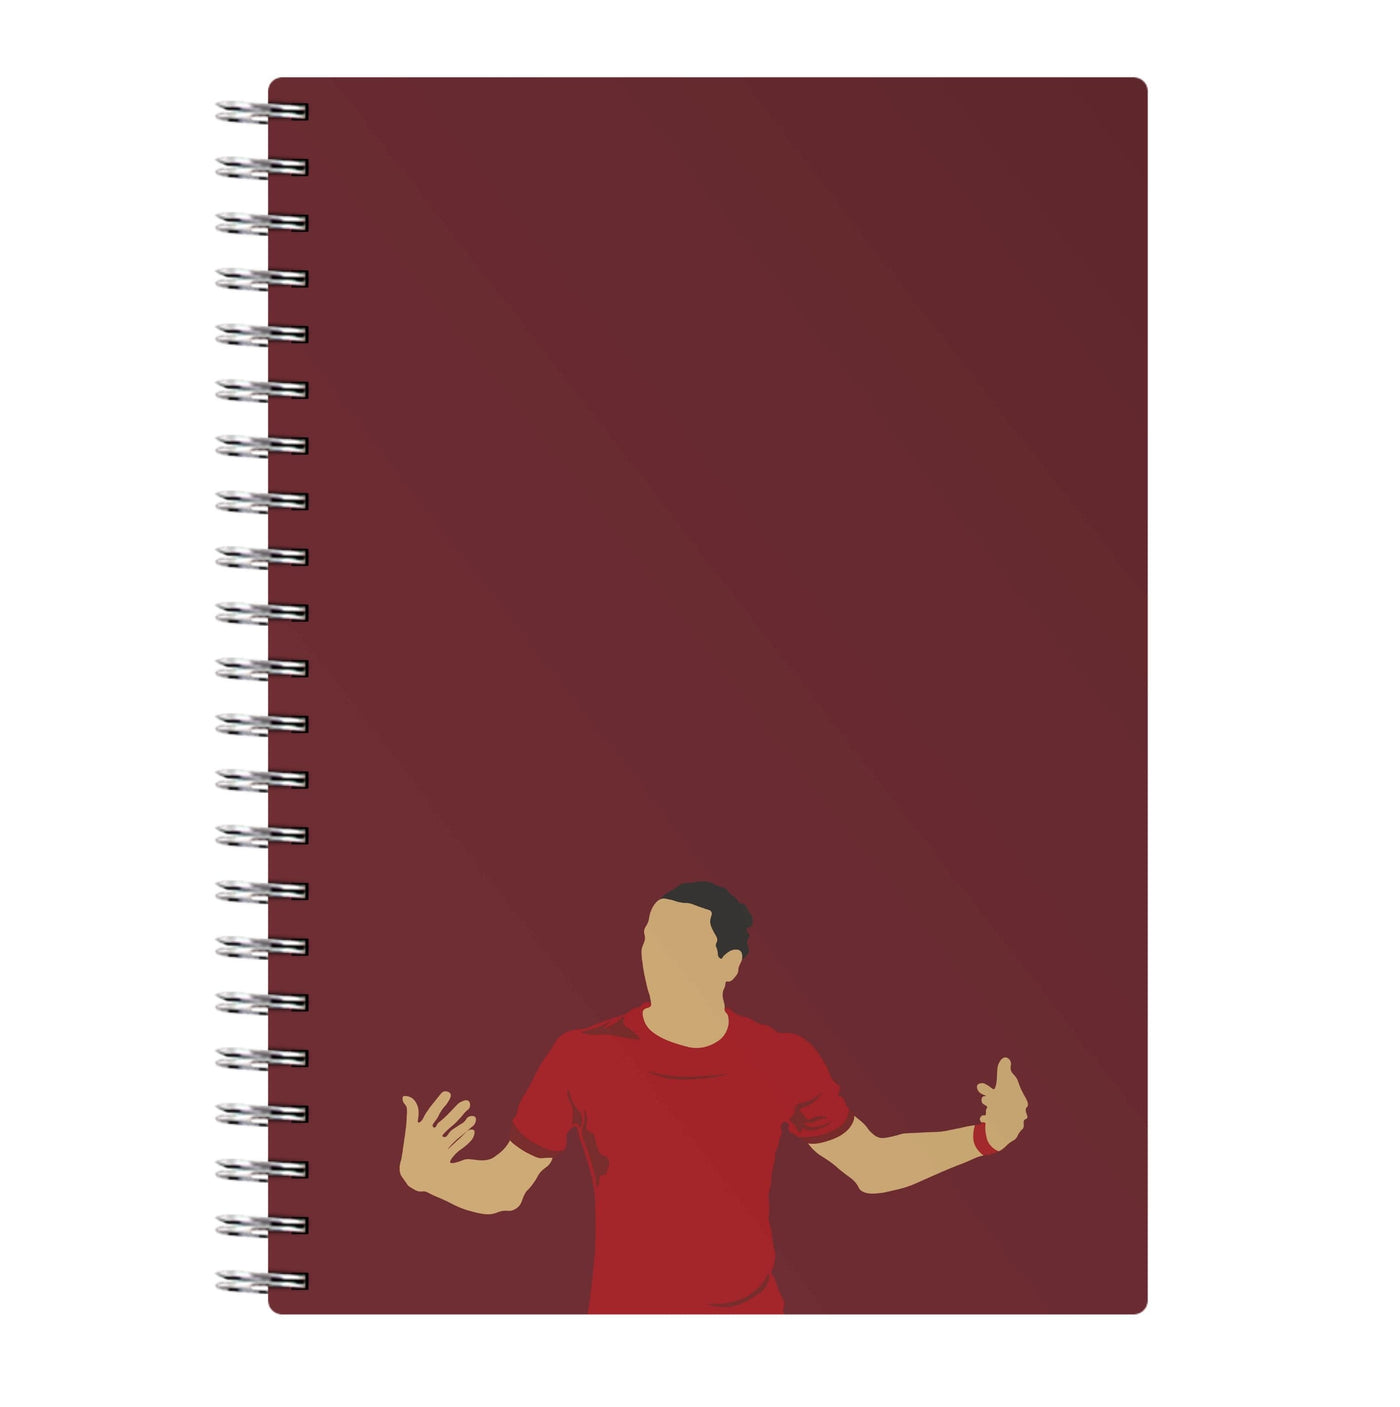 Virgil van Dijk - Football Notebook